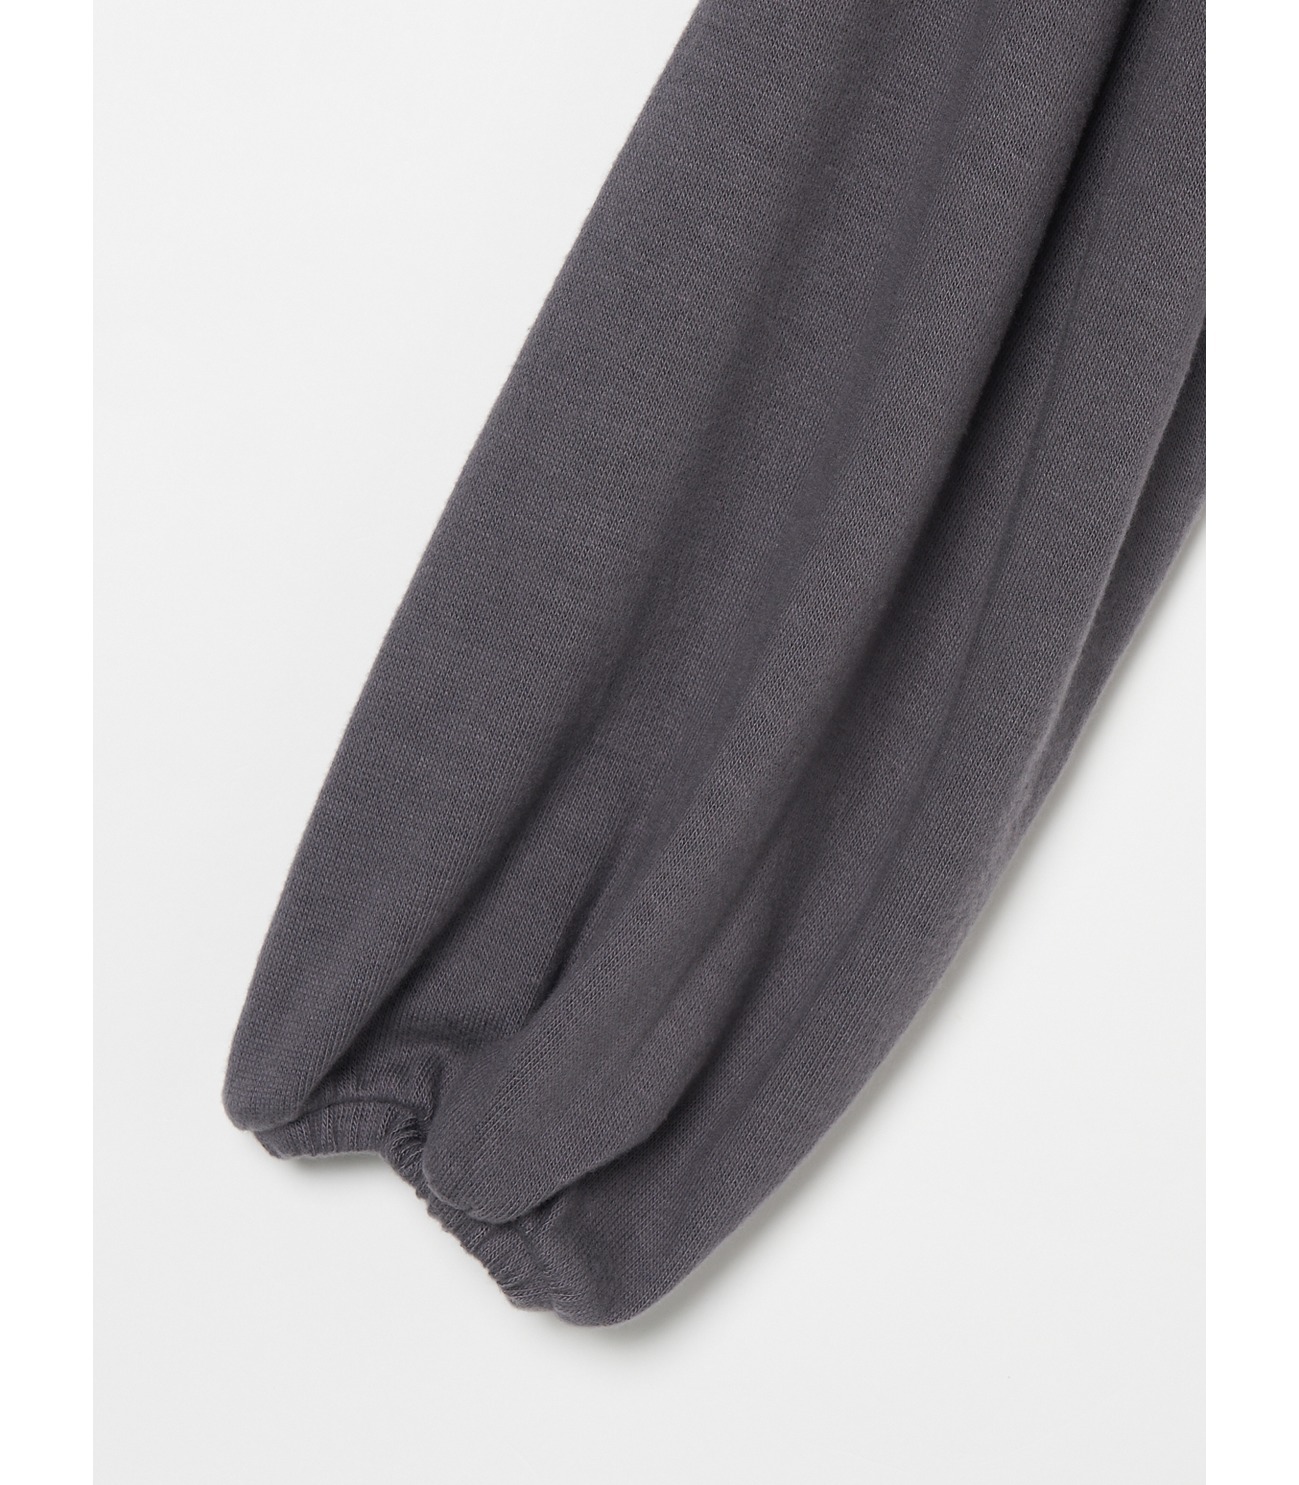 【Naoko Okusa x three dots】Brushed sweater volume sleeve 2way cardy 詳細画像 shark grey 3